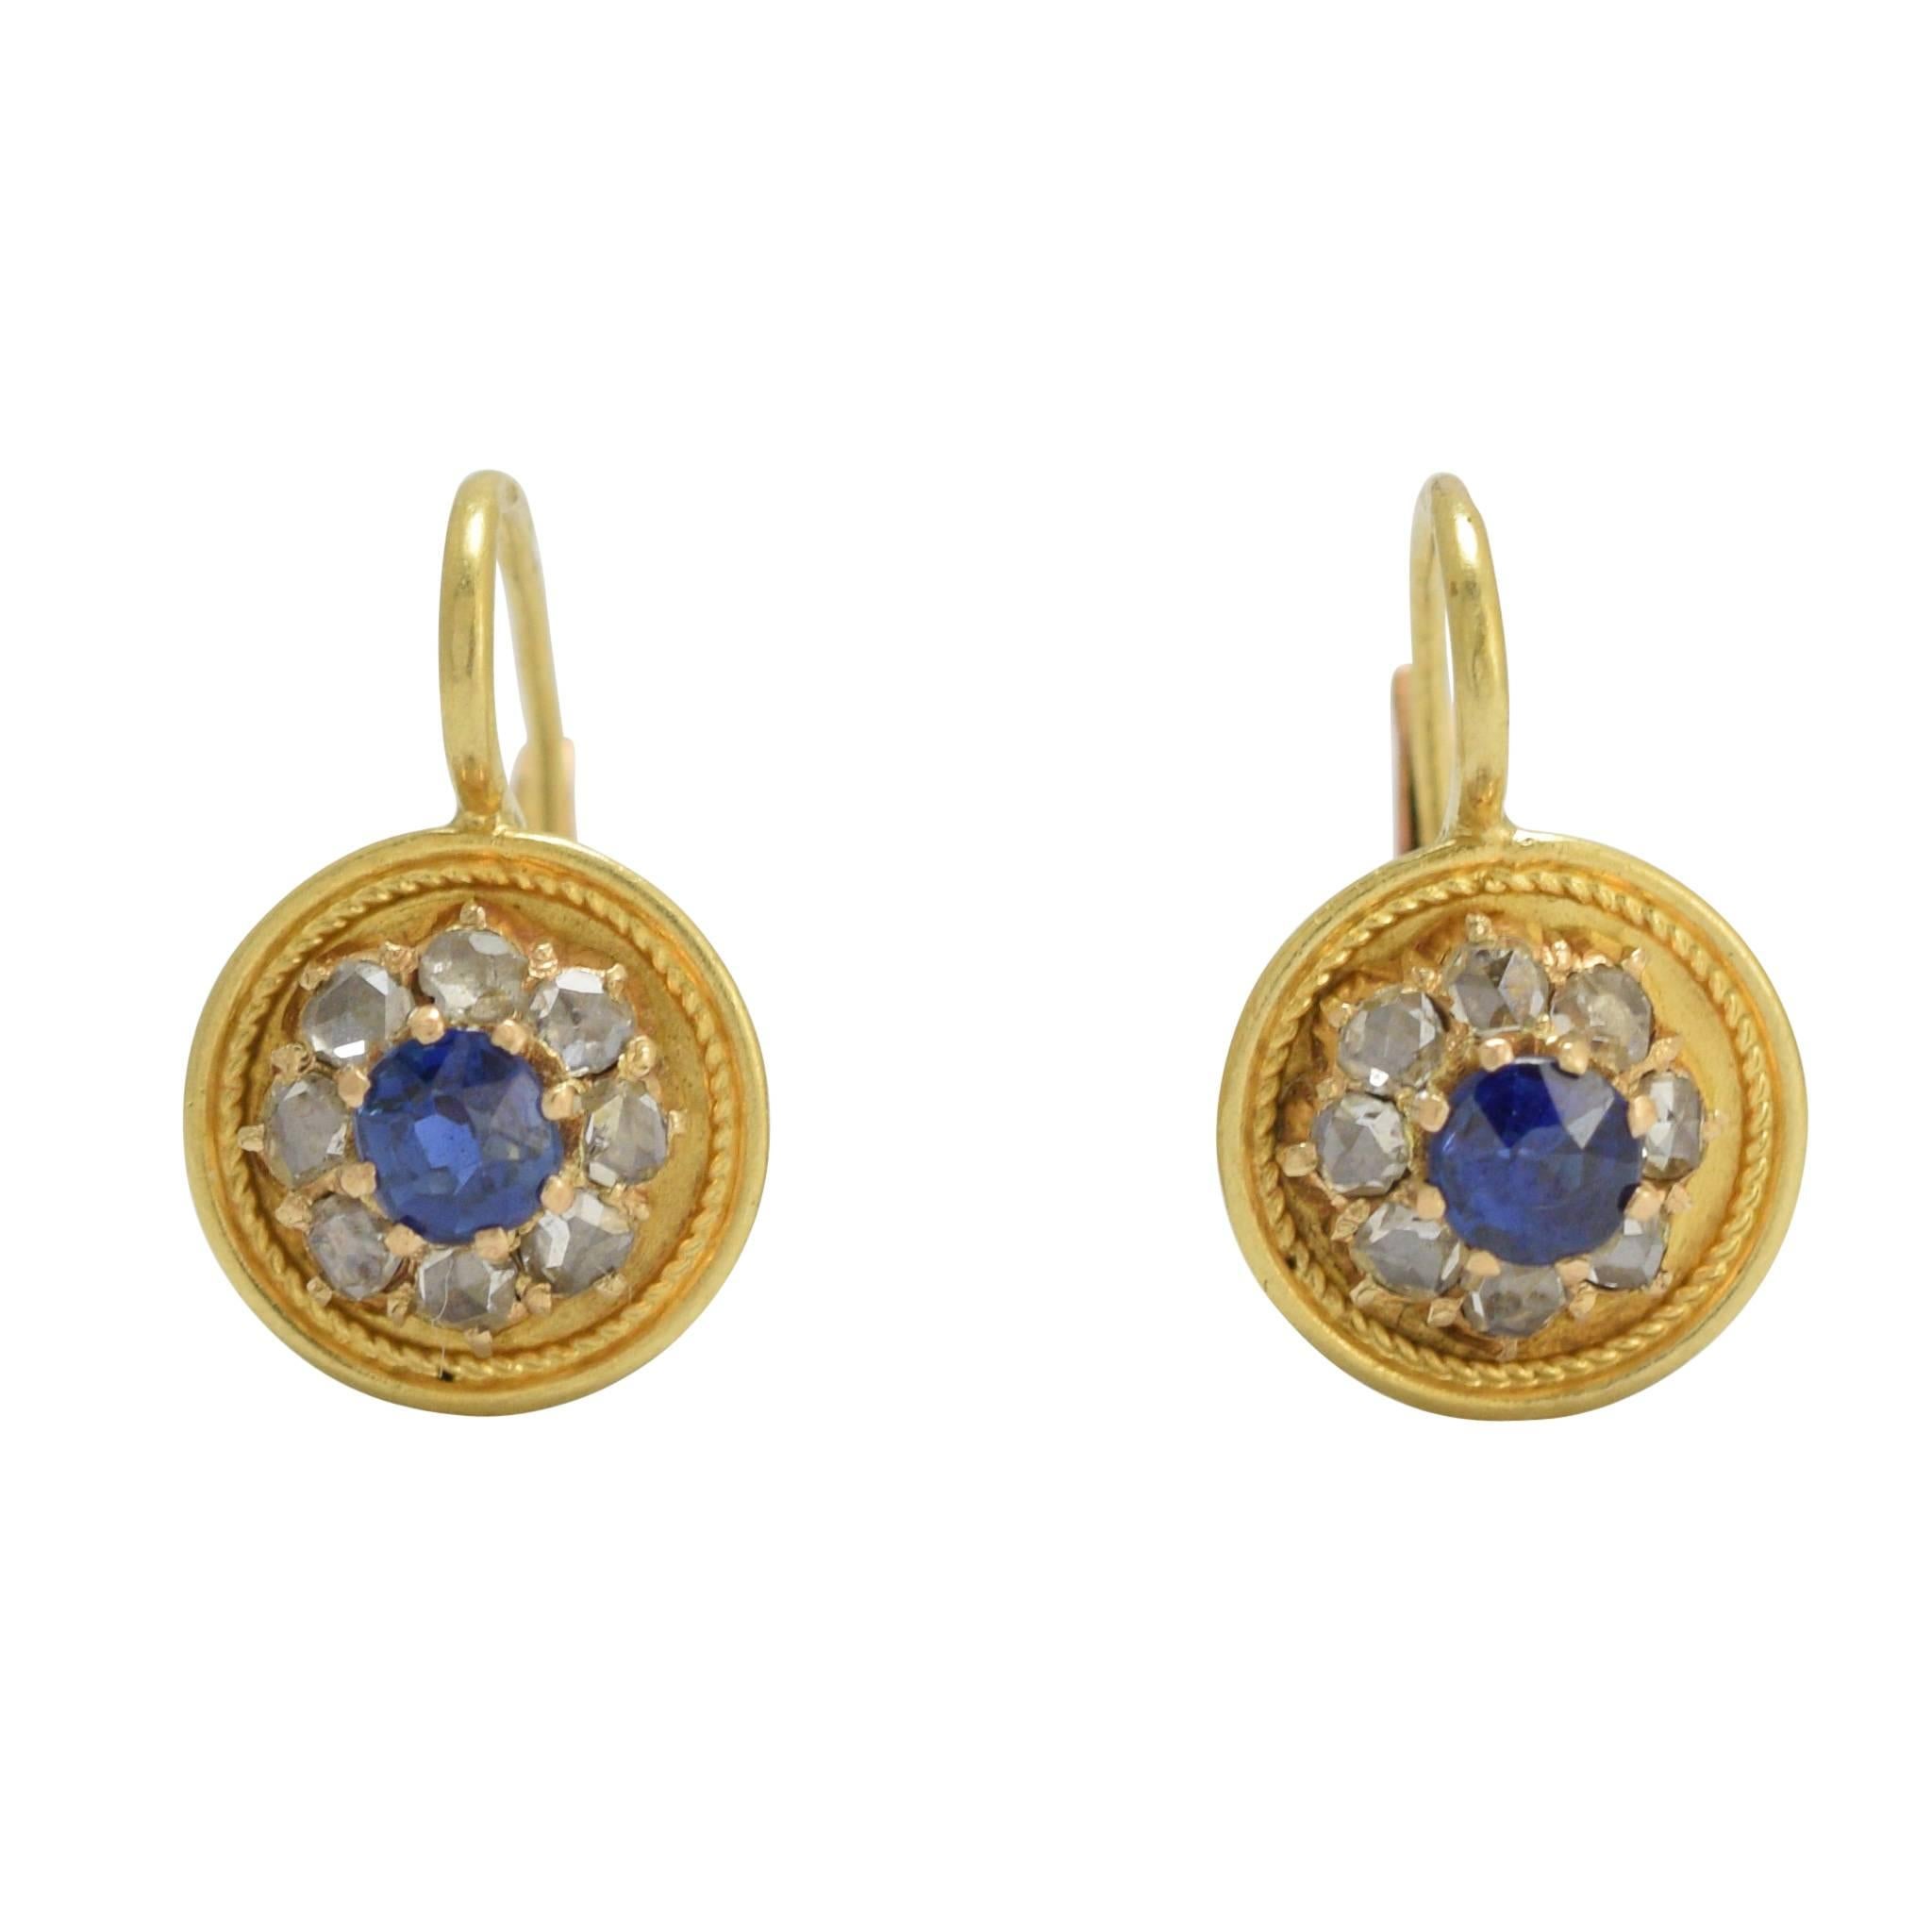 Antique Etruscan Revival Sapphire Diamond Cluster Earrings